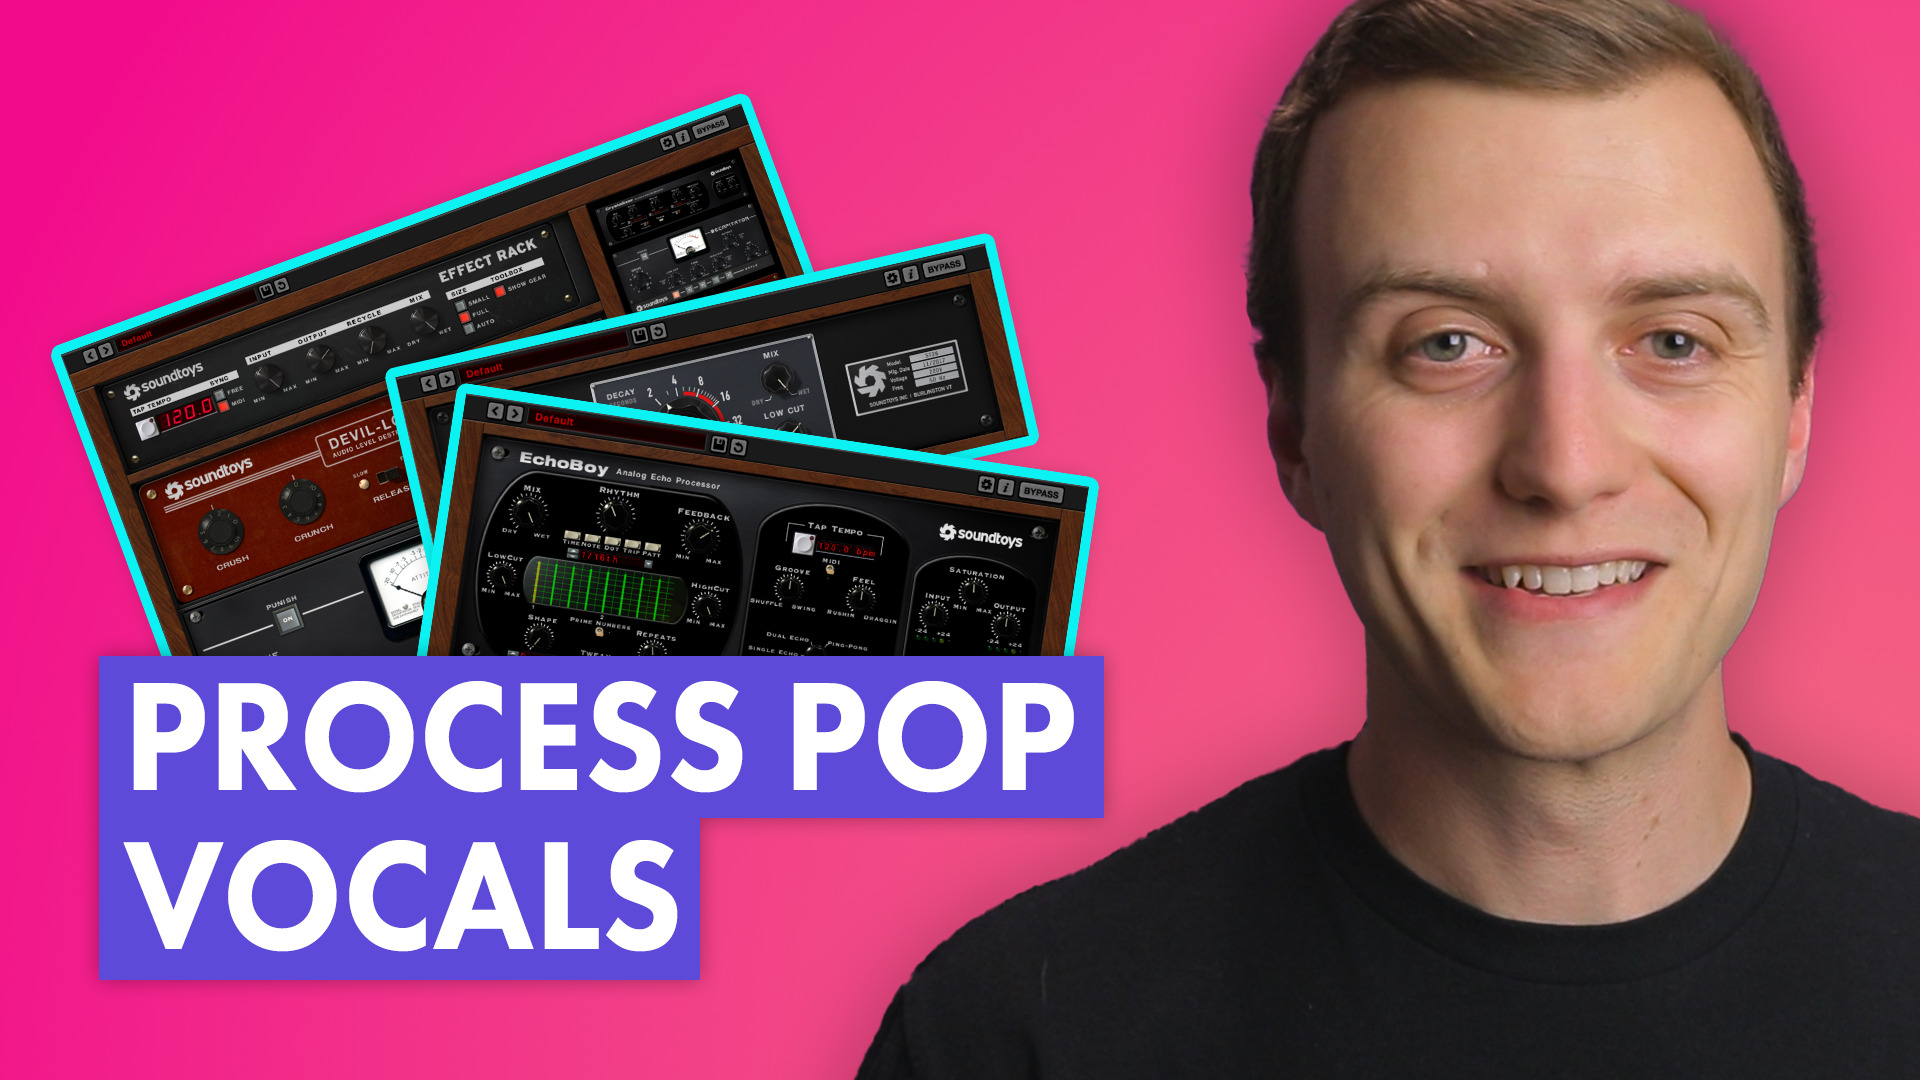 5 Creative Ways to Process Pop Vocals (ft. Soundtoys)